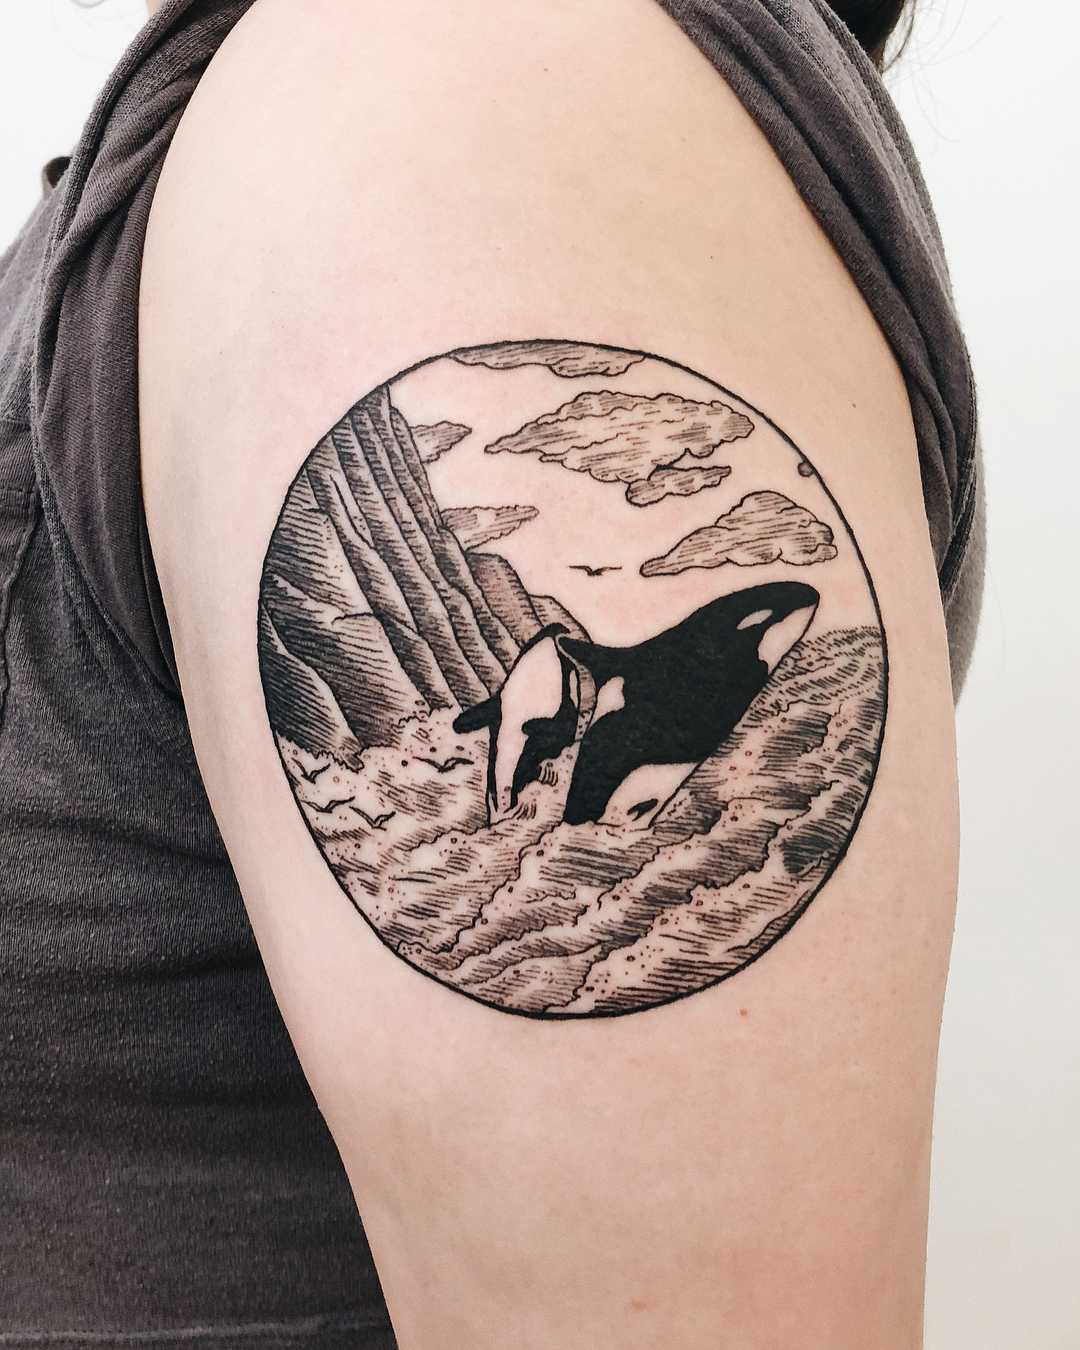 Killer whales tattoo